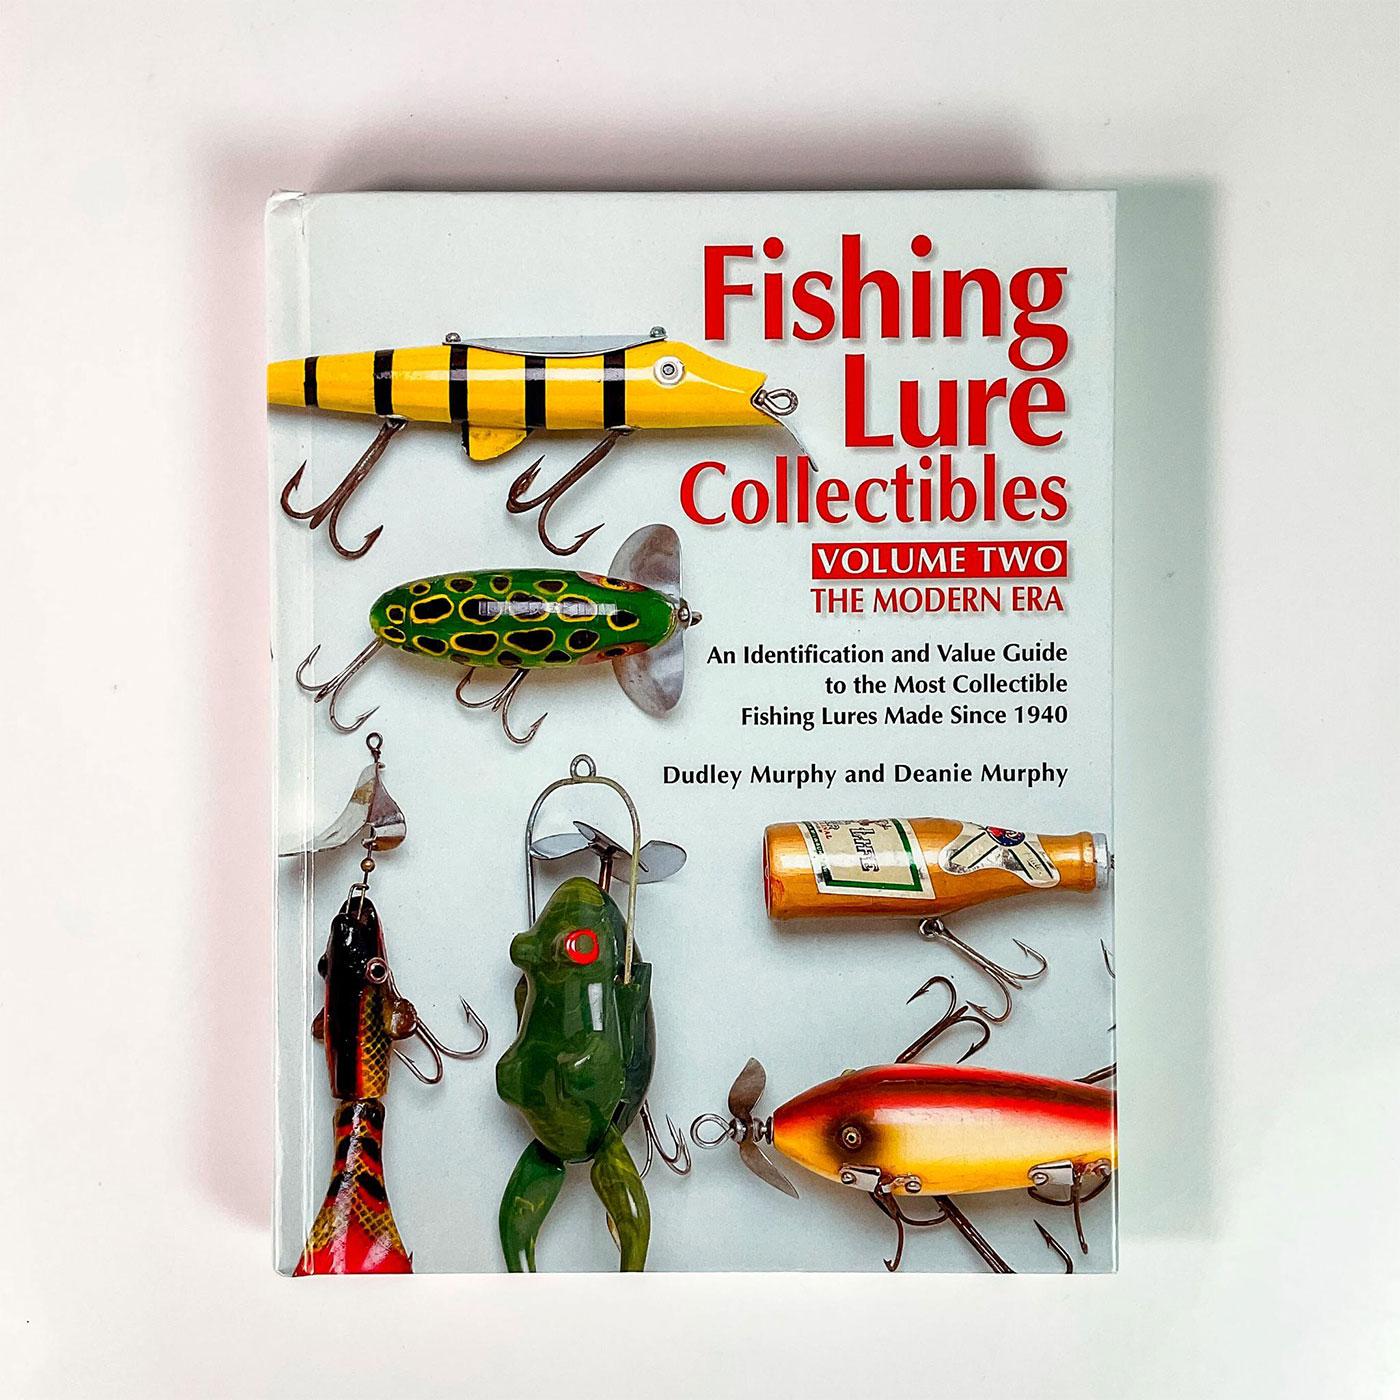 Various modern fishing books.